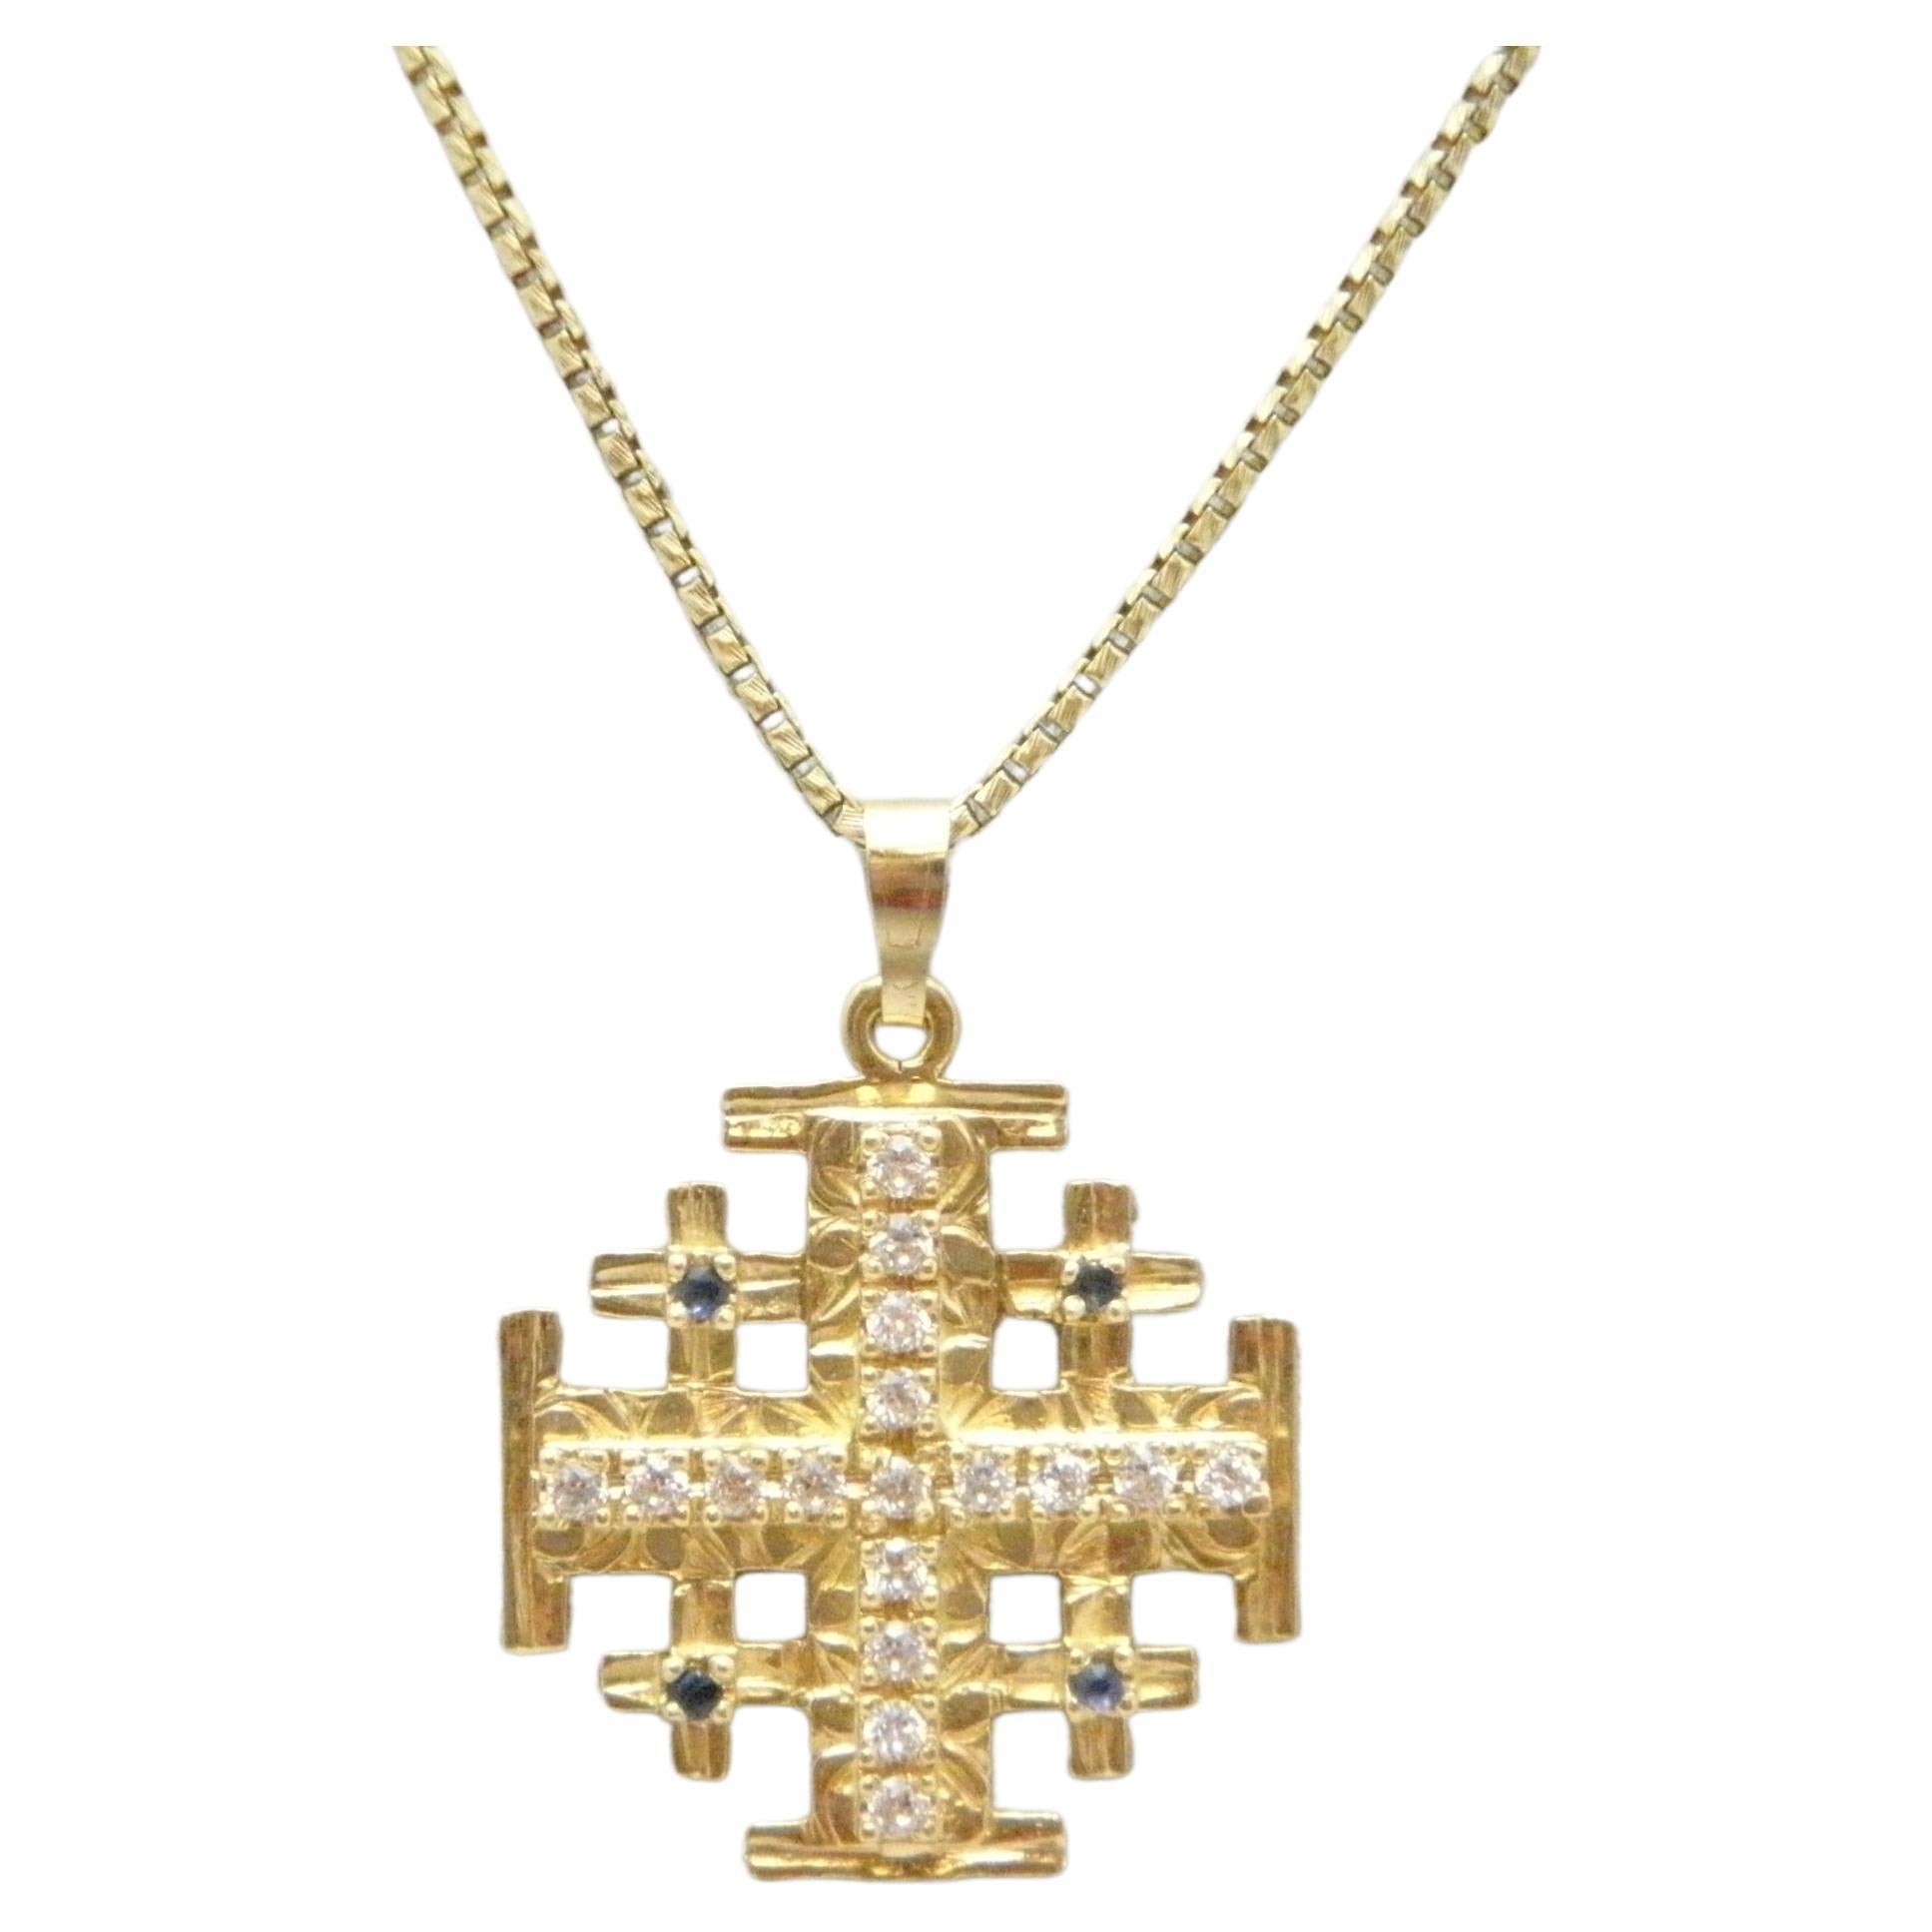 Vintage 14ct Gold Heavy Jerusalem Cross Pendant Necklace Box Chain 585 19 Inch For Sale